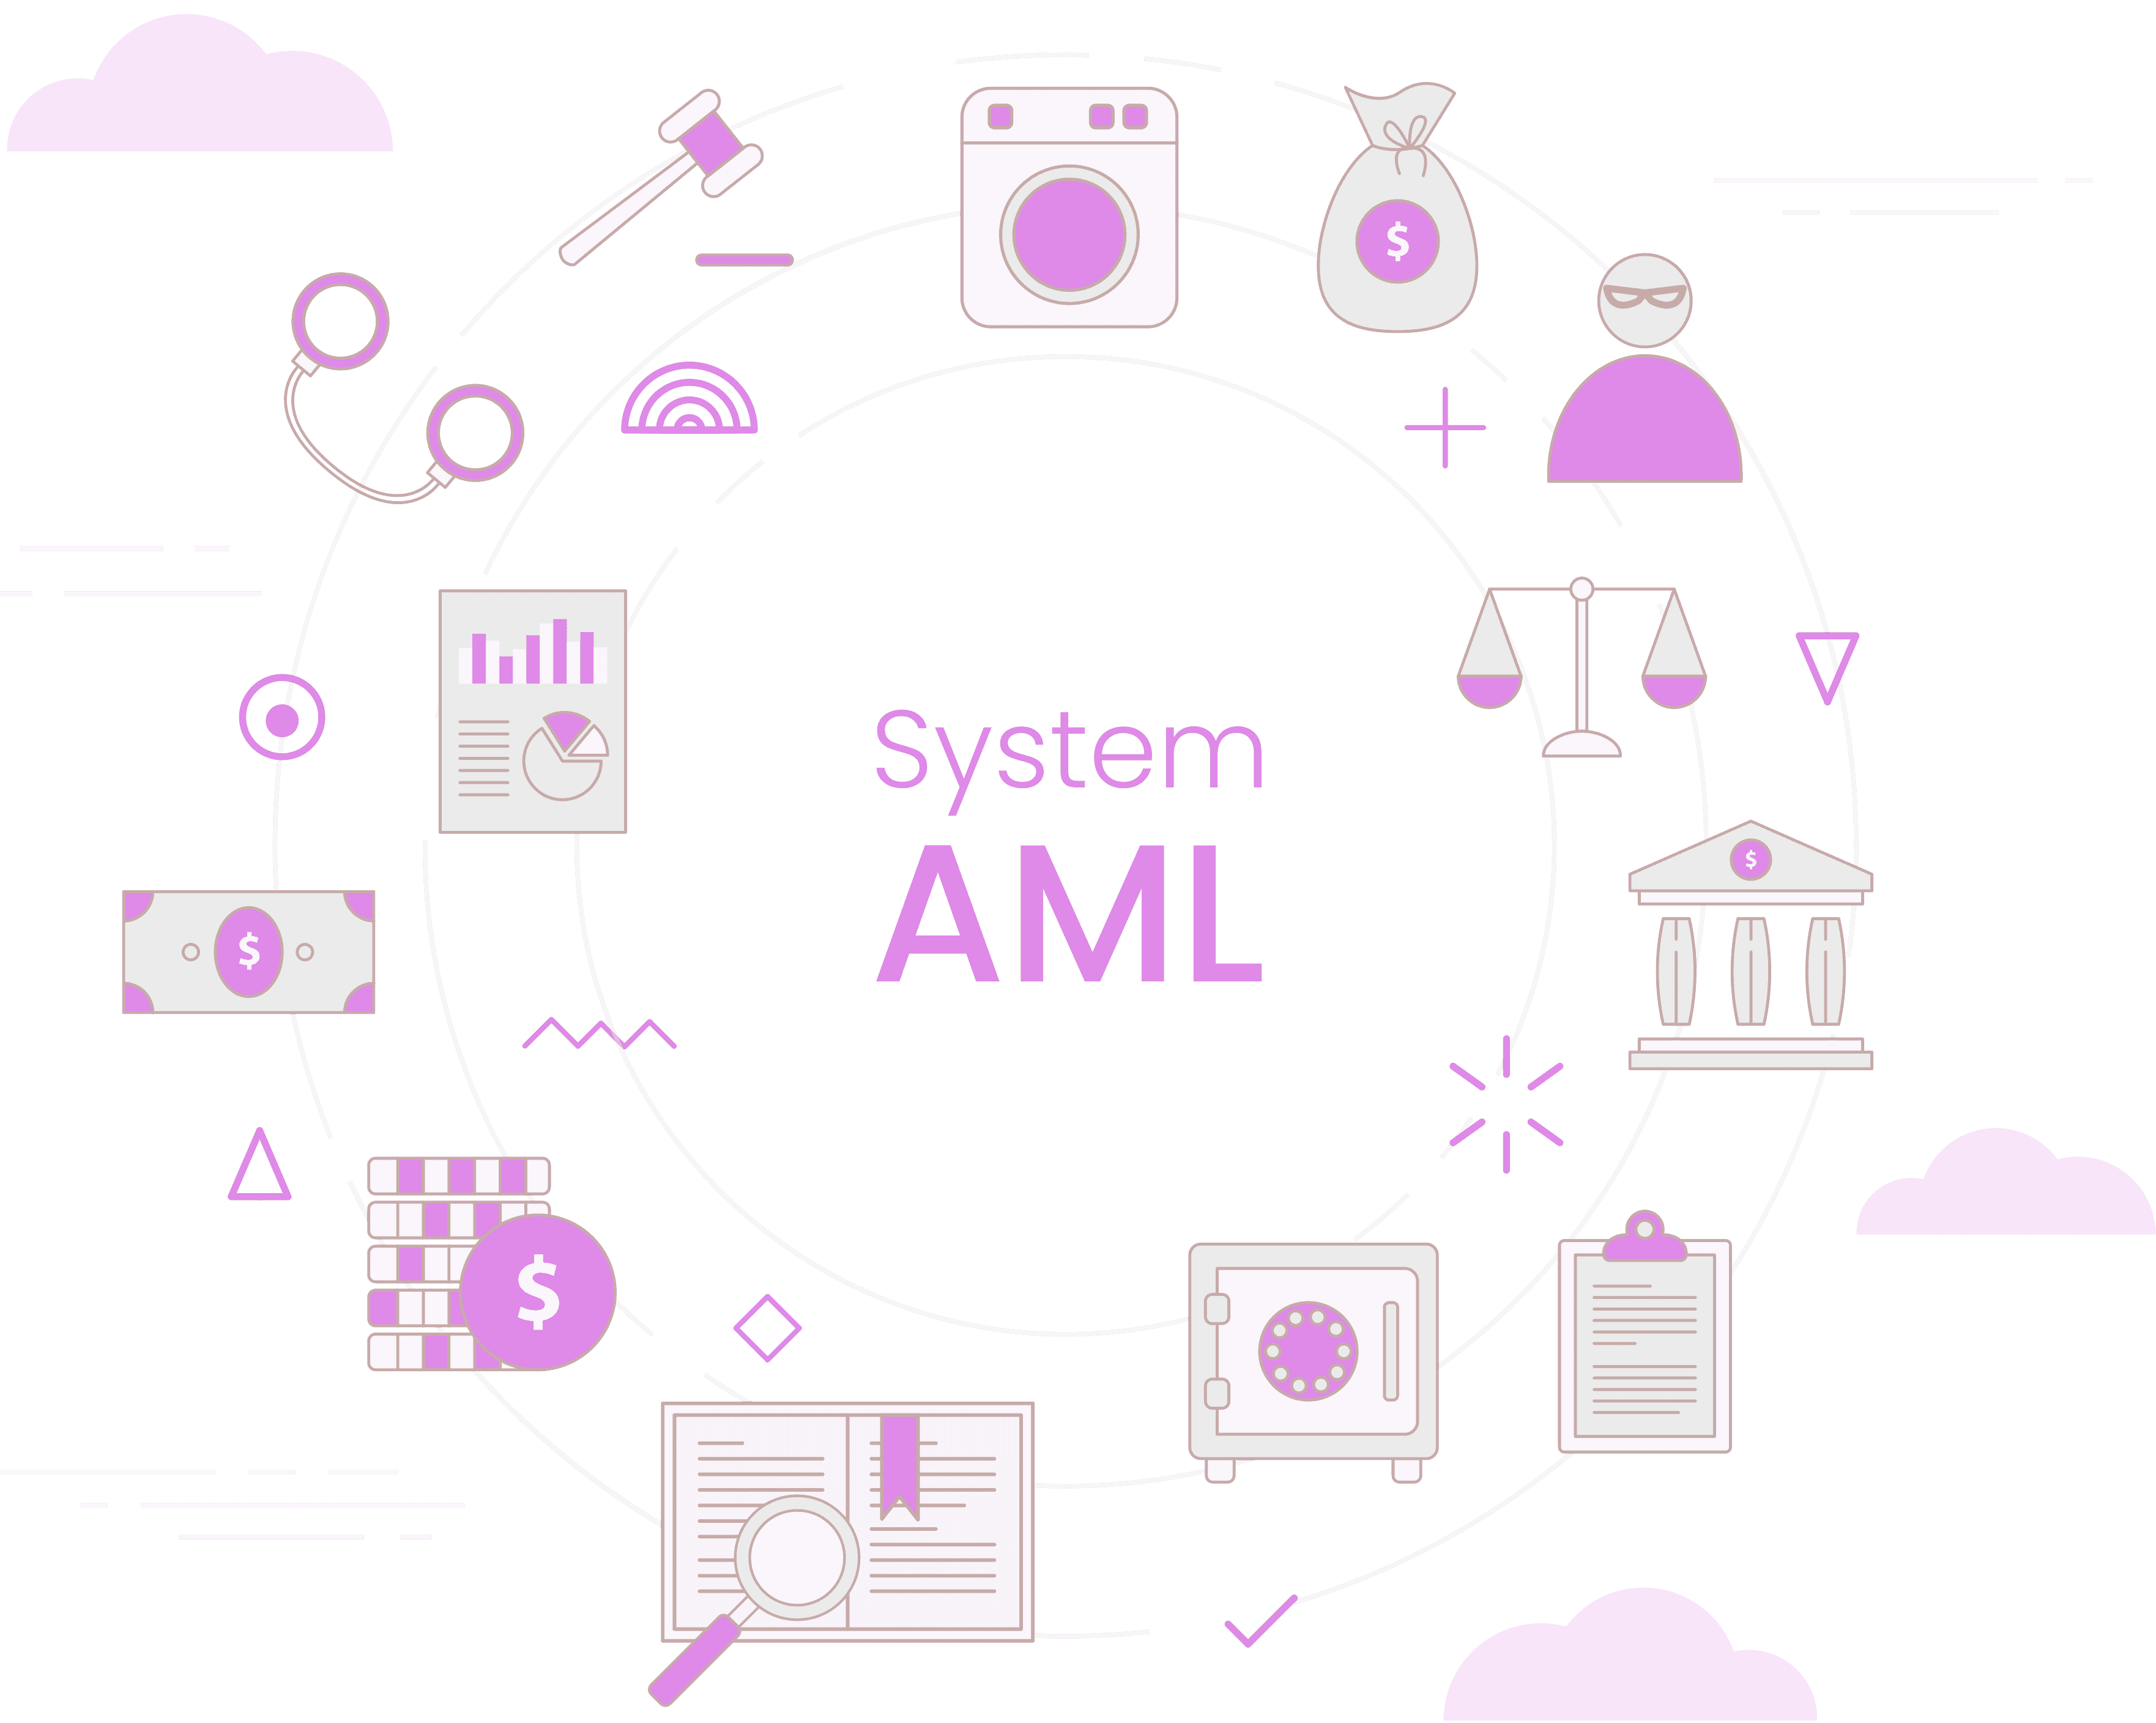 System AML